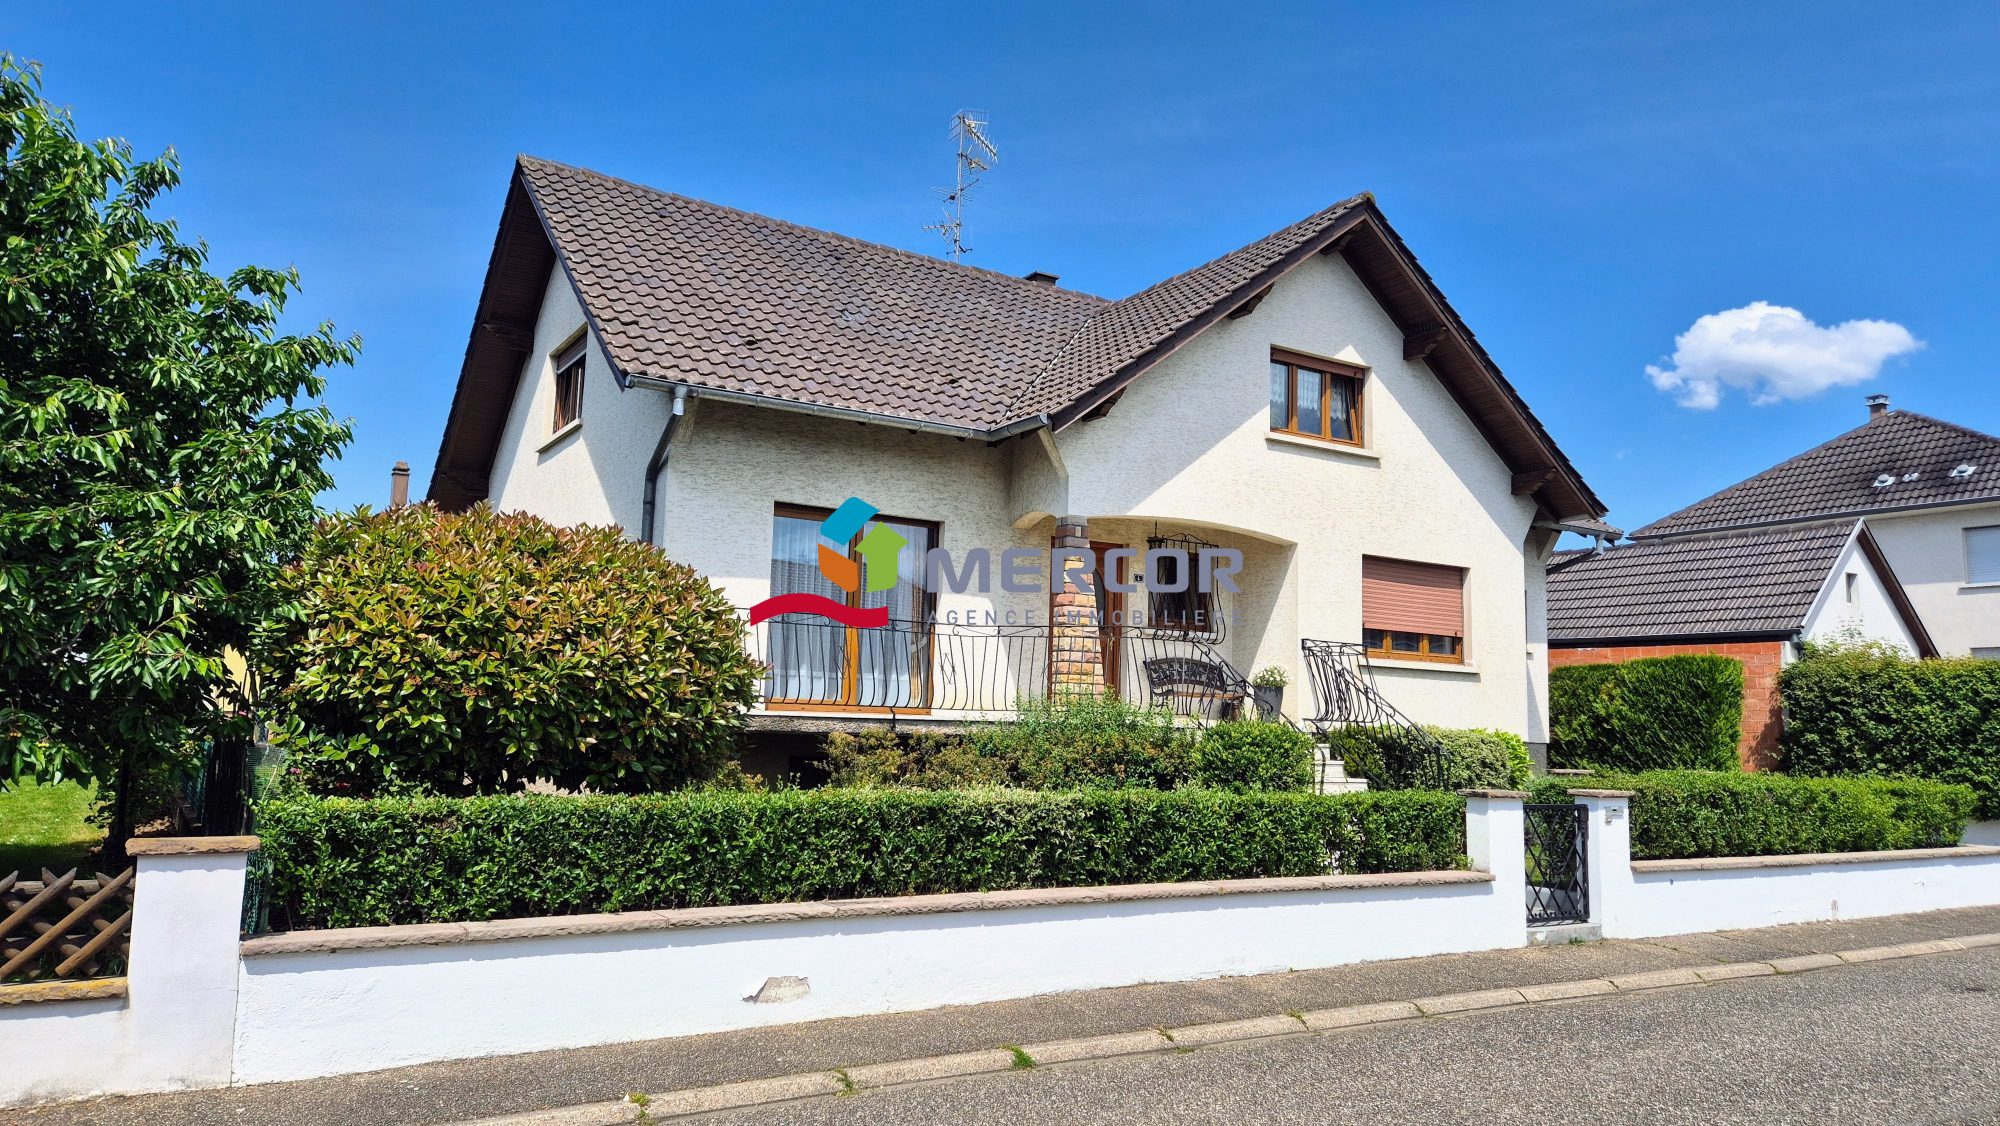 Vente Maison 161m² 7 Pièces à Geispolsheim (67118) - Mercor